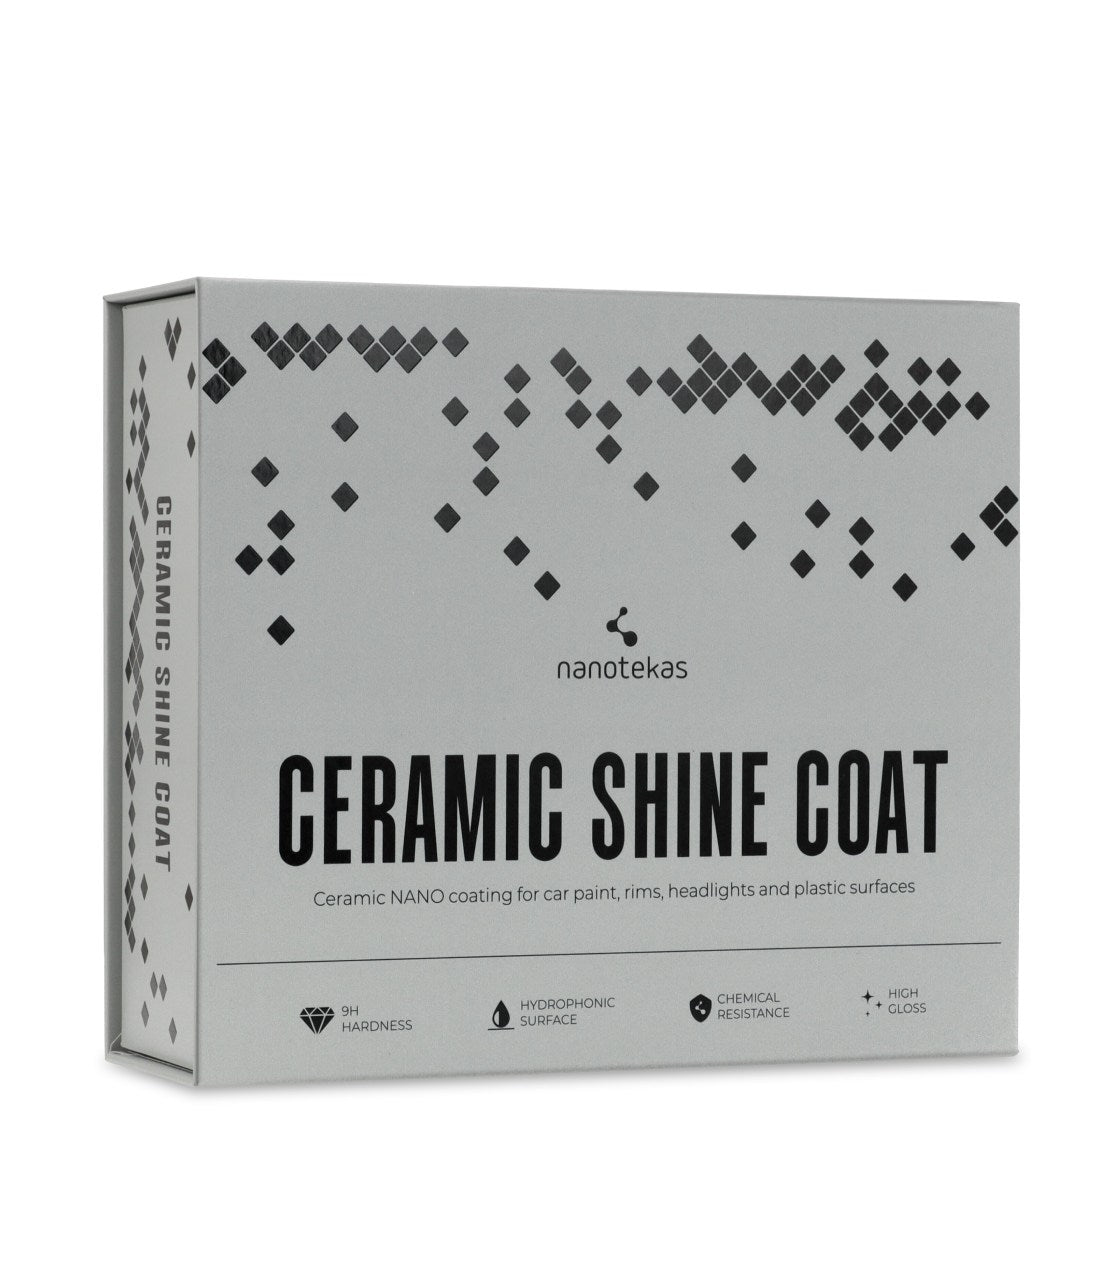 Keramikinė danga automobilio kėbului Ceramic Shine Coat